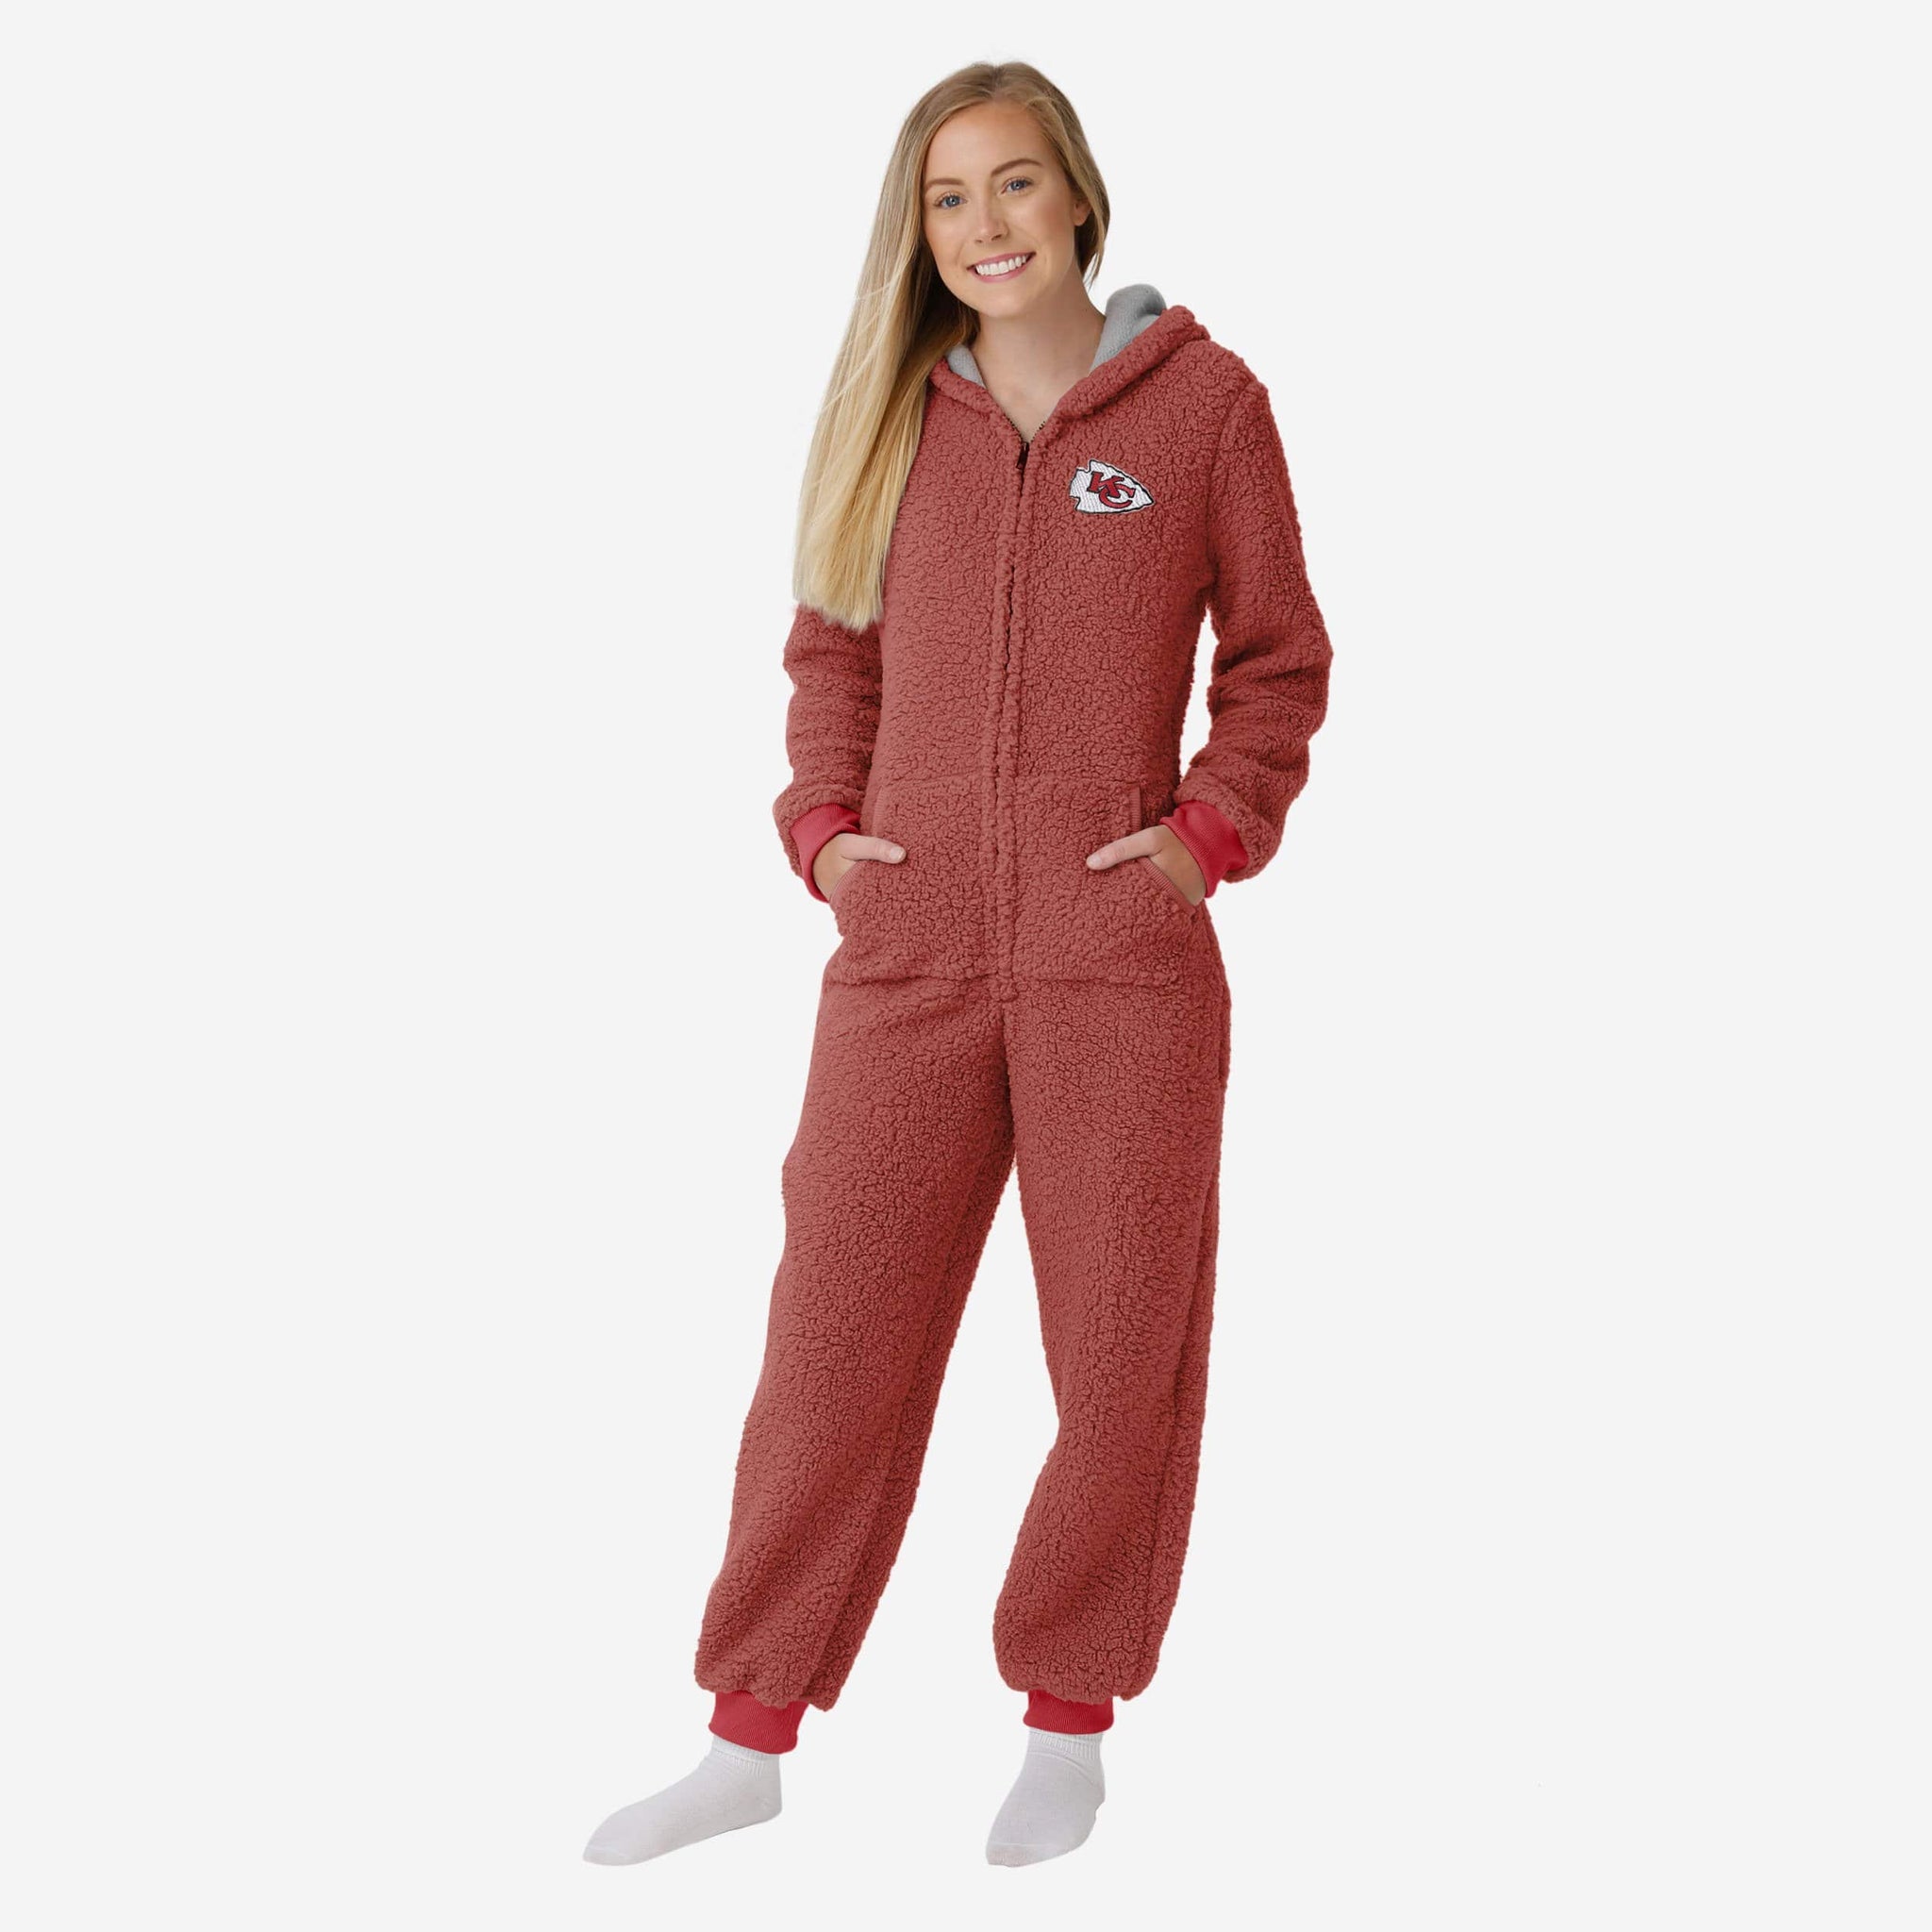 Chicago Blackhawks Women's Red Cotton Pajama Pants Large